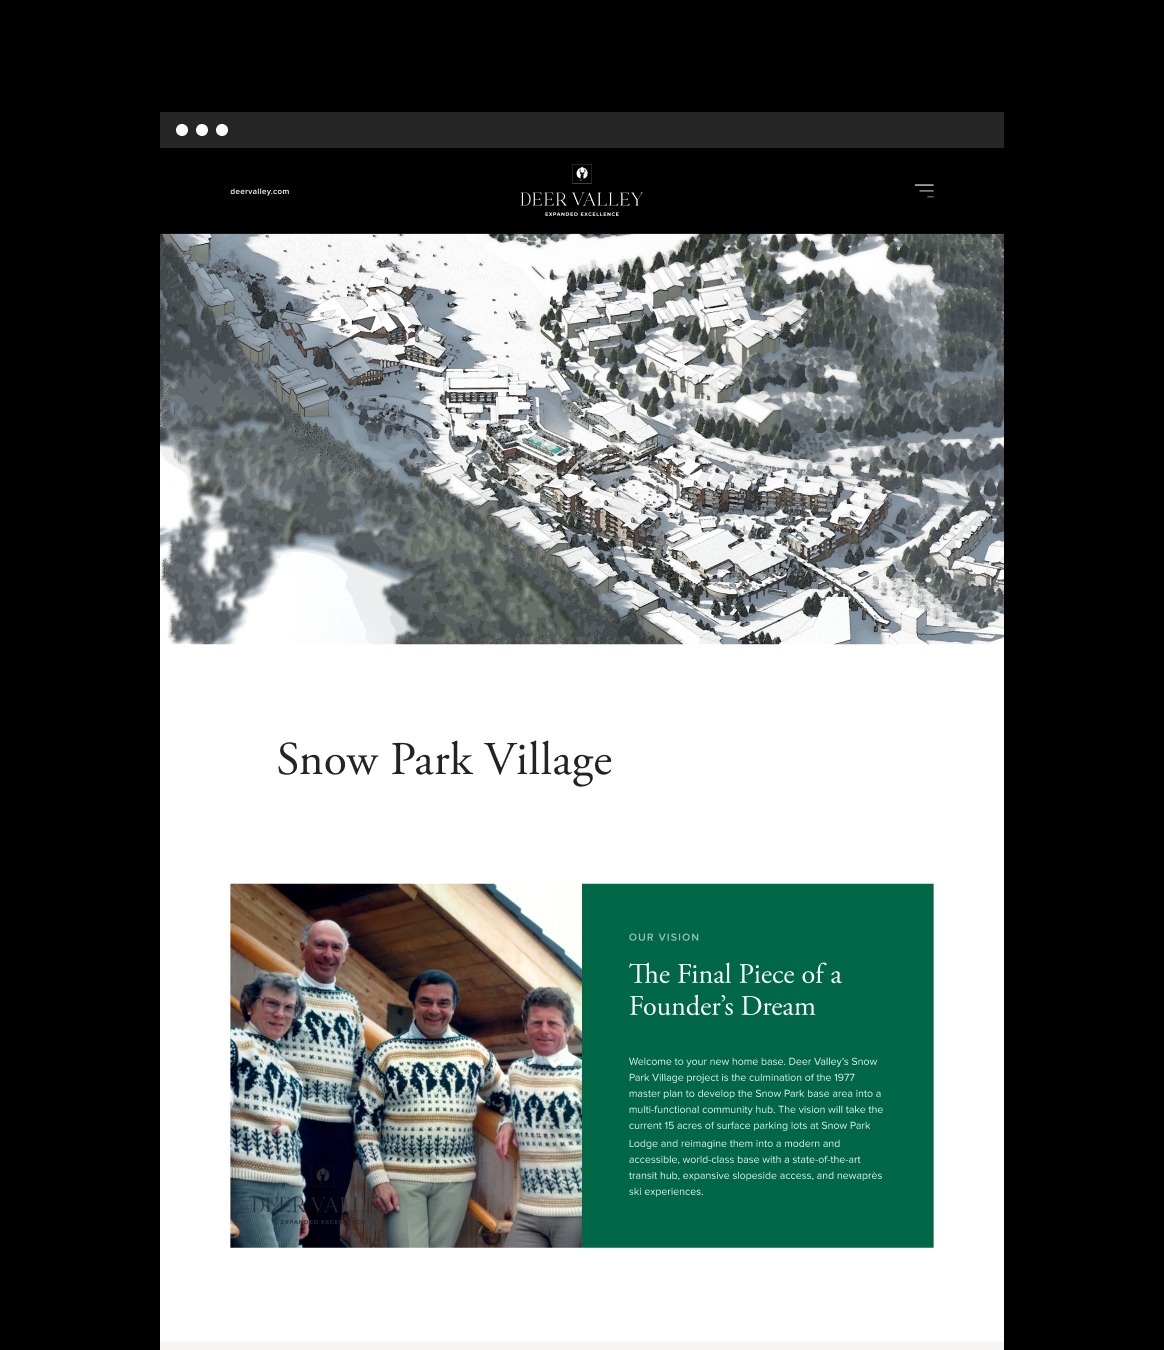 The new Website for Deer Valley Ski Resort